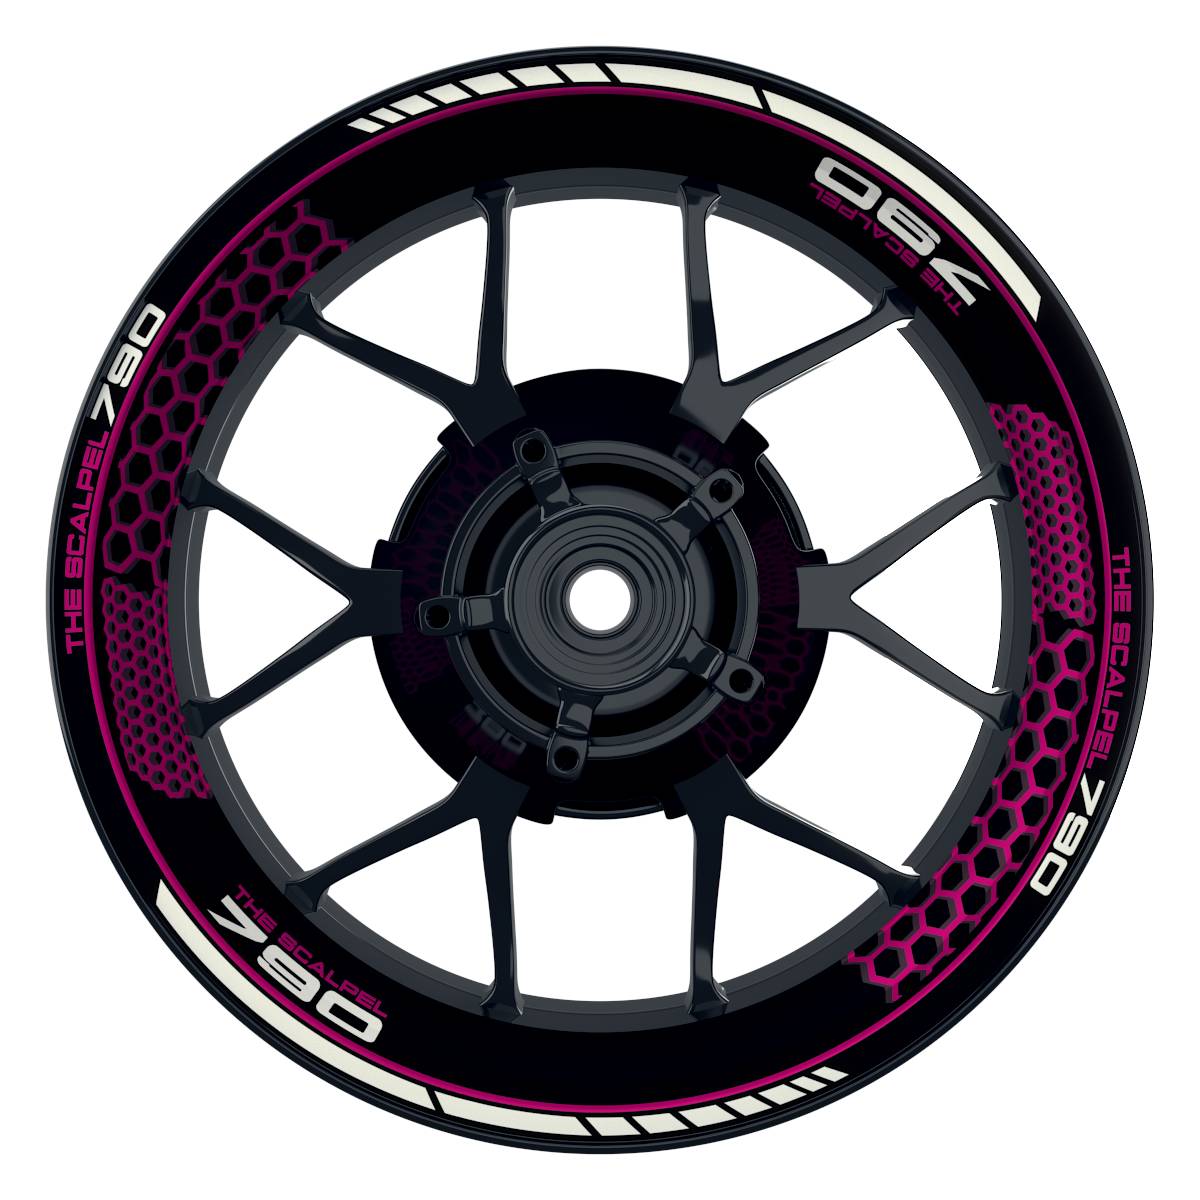 THE SCALPEL 790 Hexagon schwarz pink Wheelsticker Felgenaufkleber